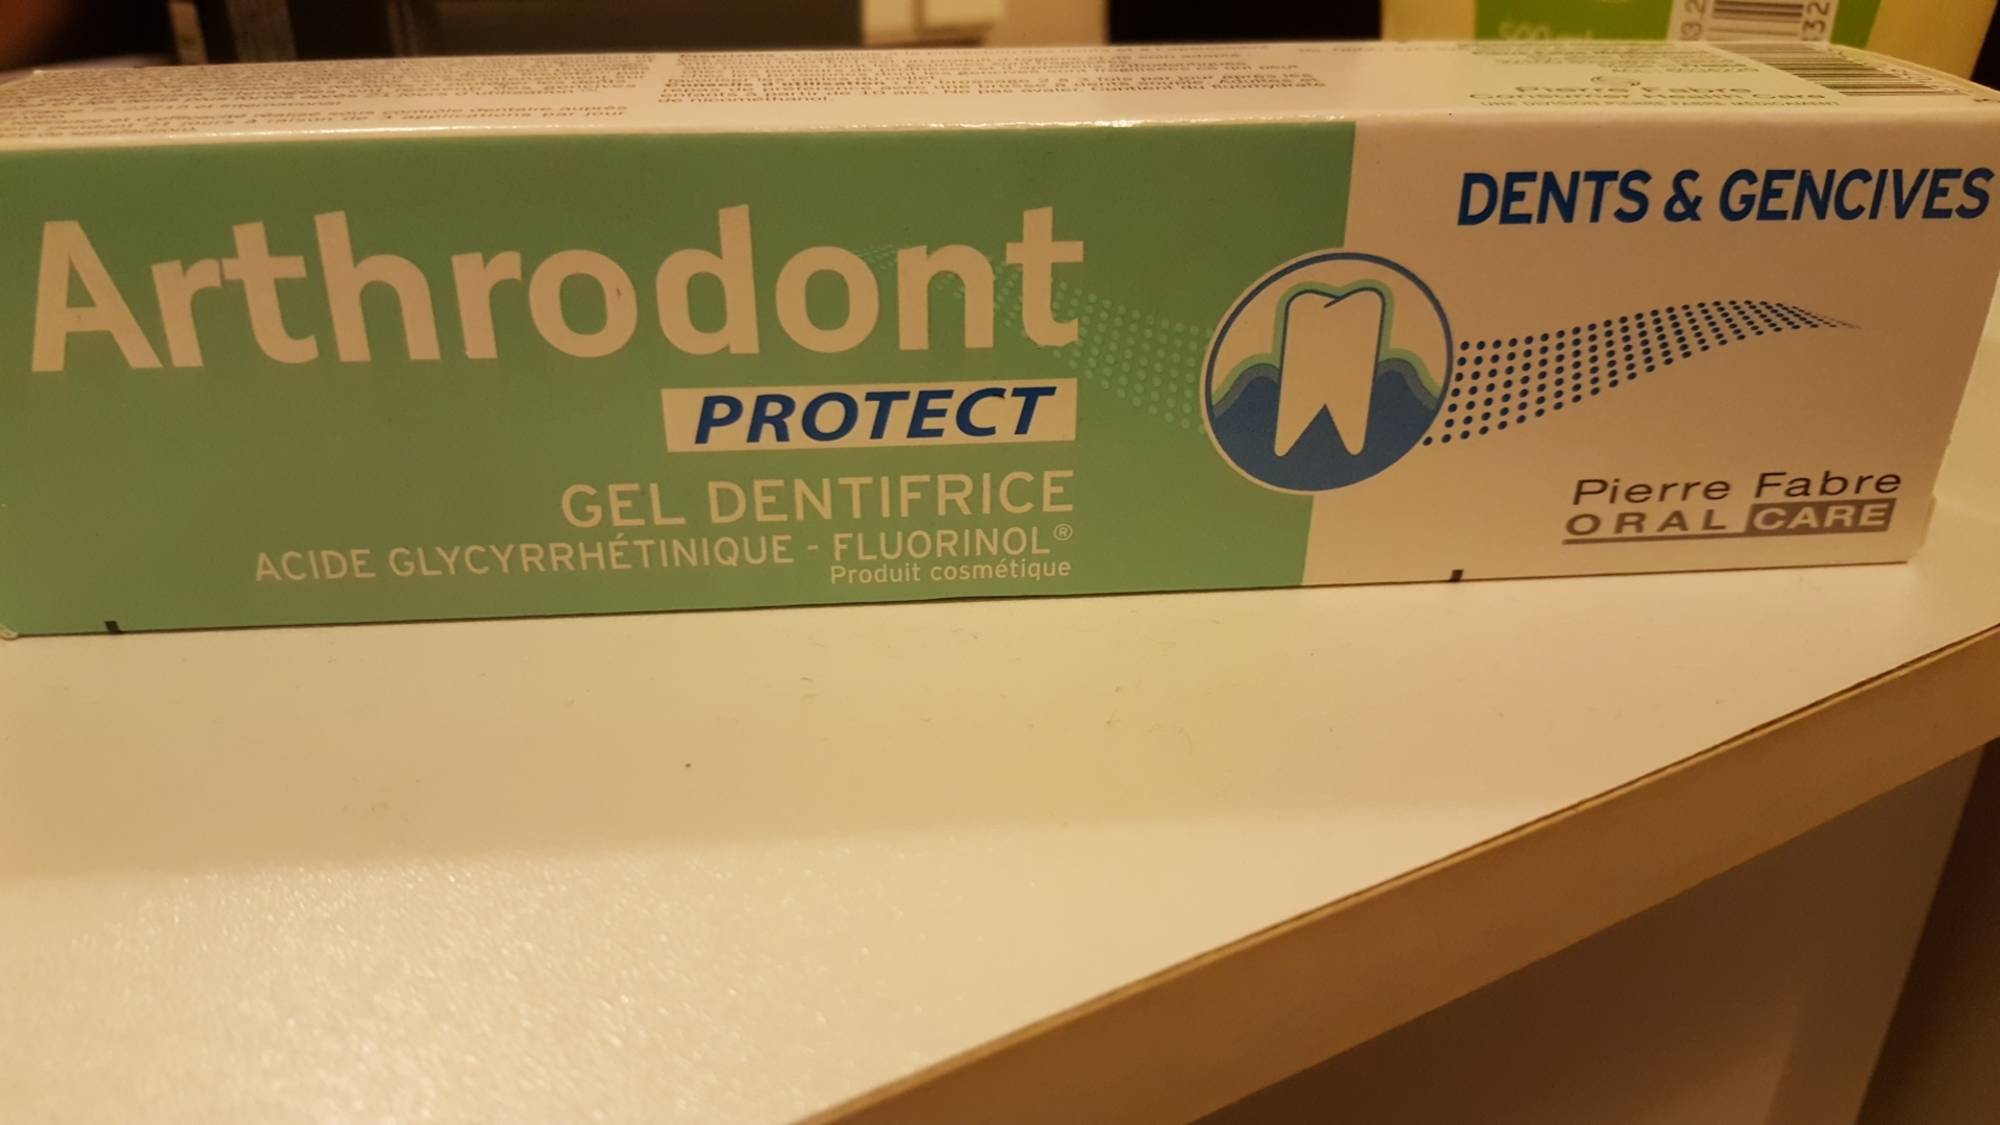 PIERRE FABRE - Arthrodont protect - Gel dentifrice